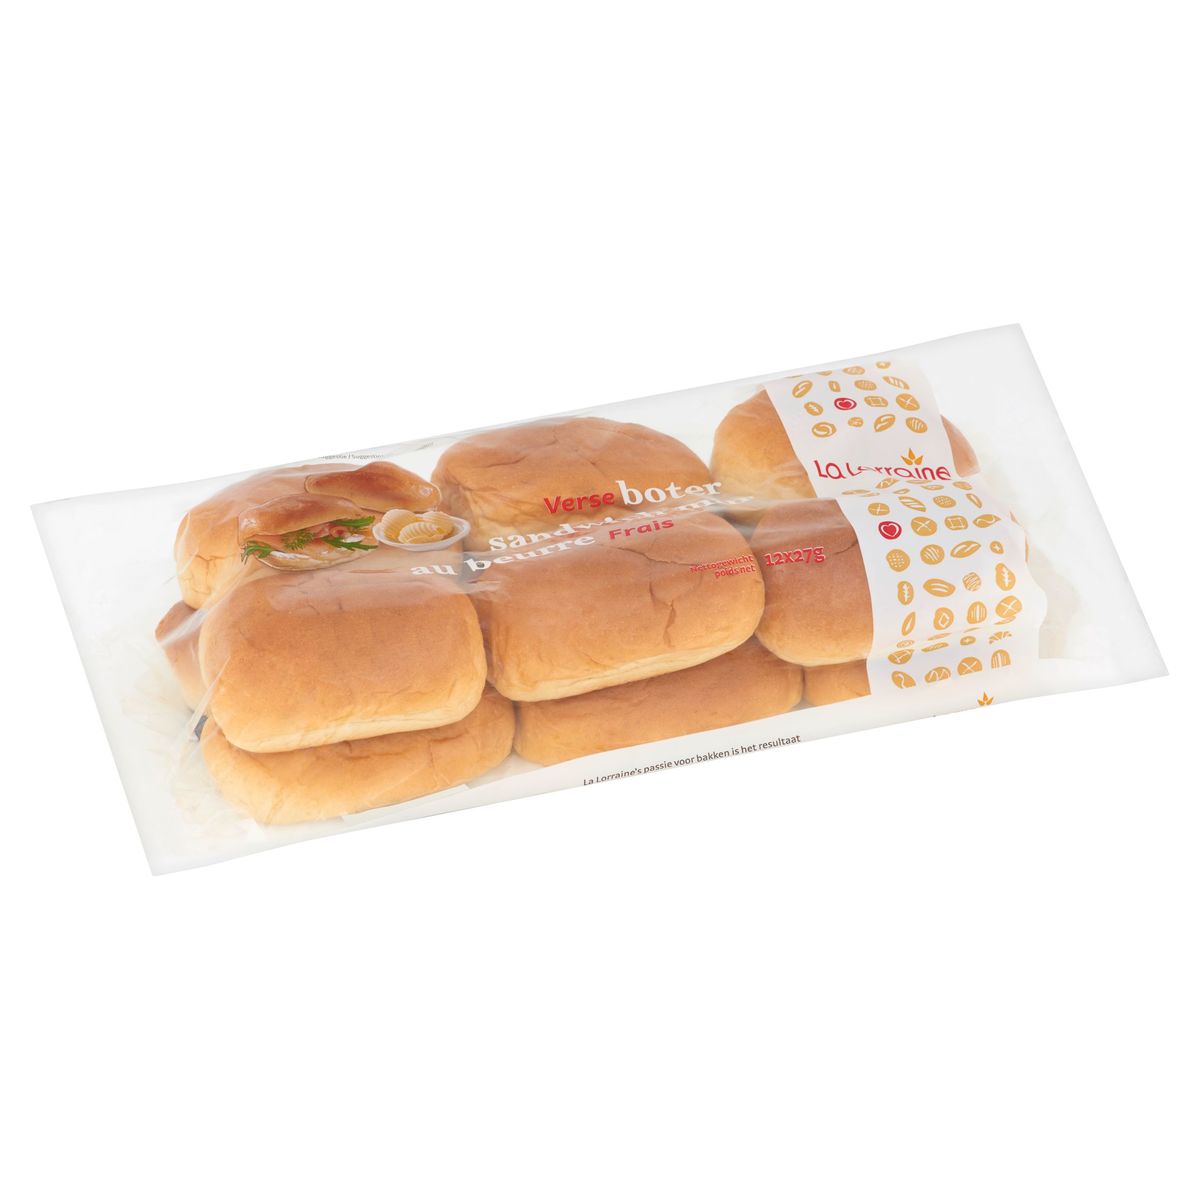 La Lorraine Verse Boter Sandwich Mini 12 x 27 g